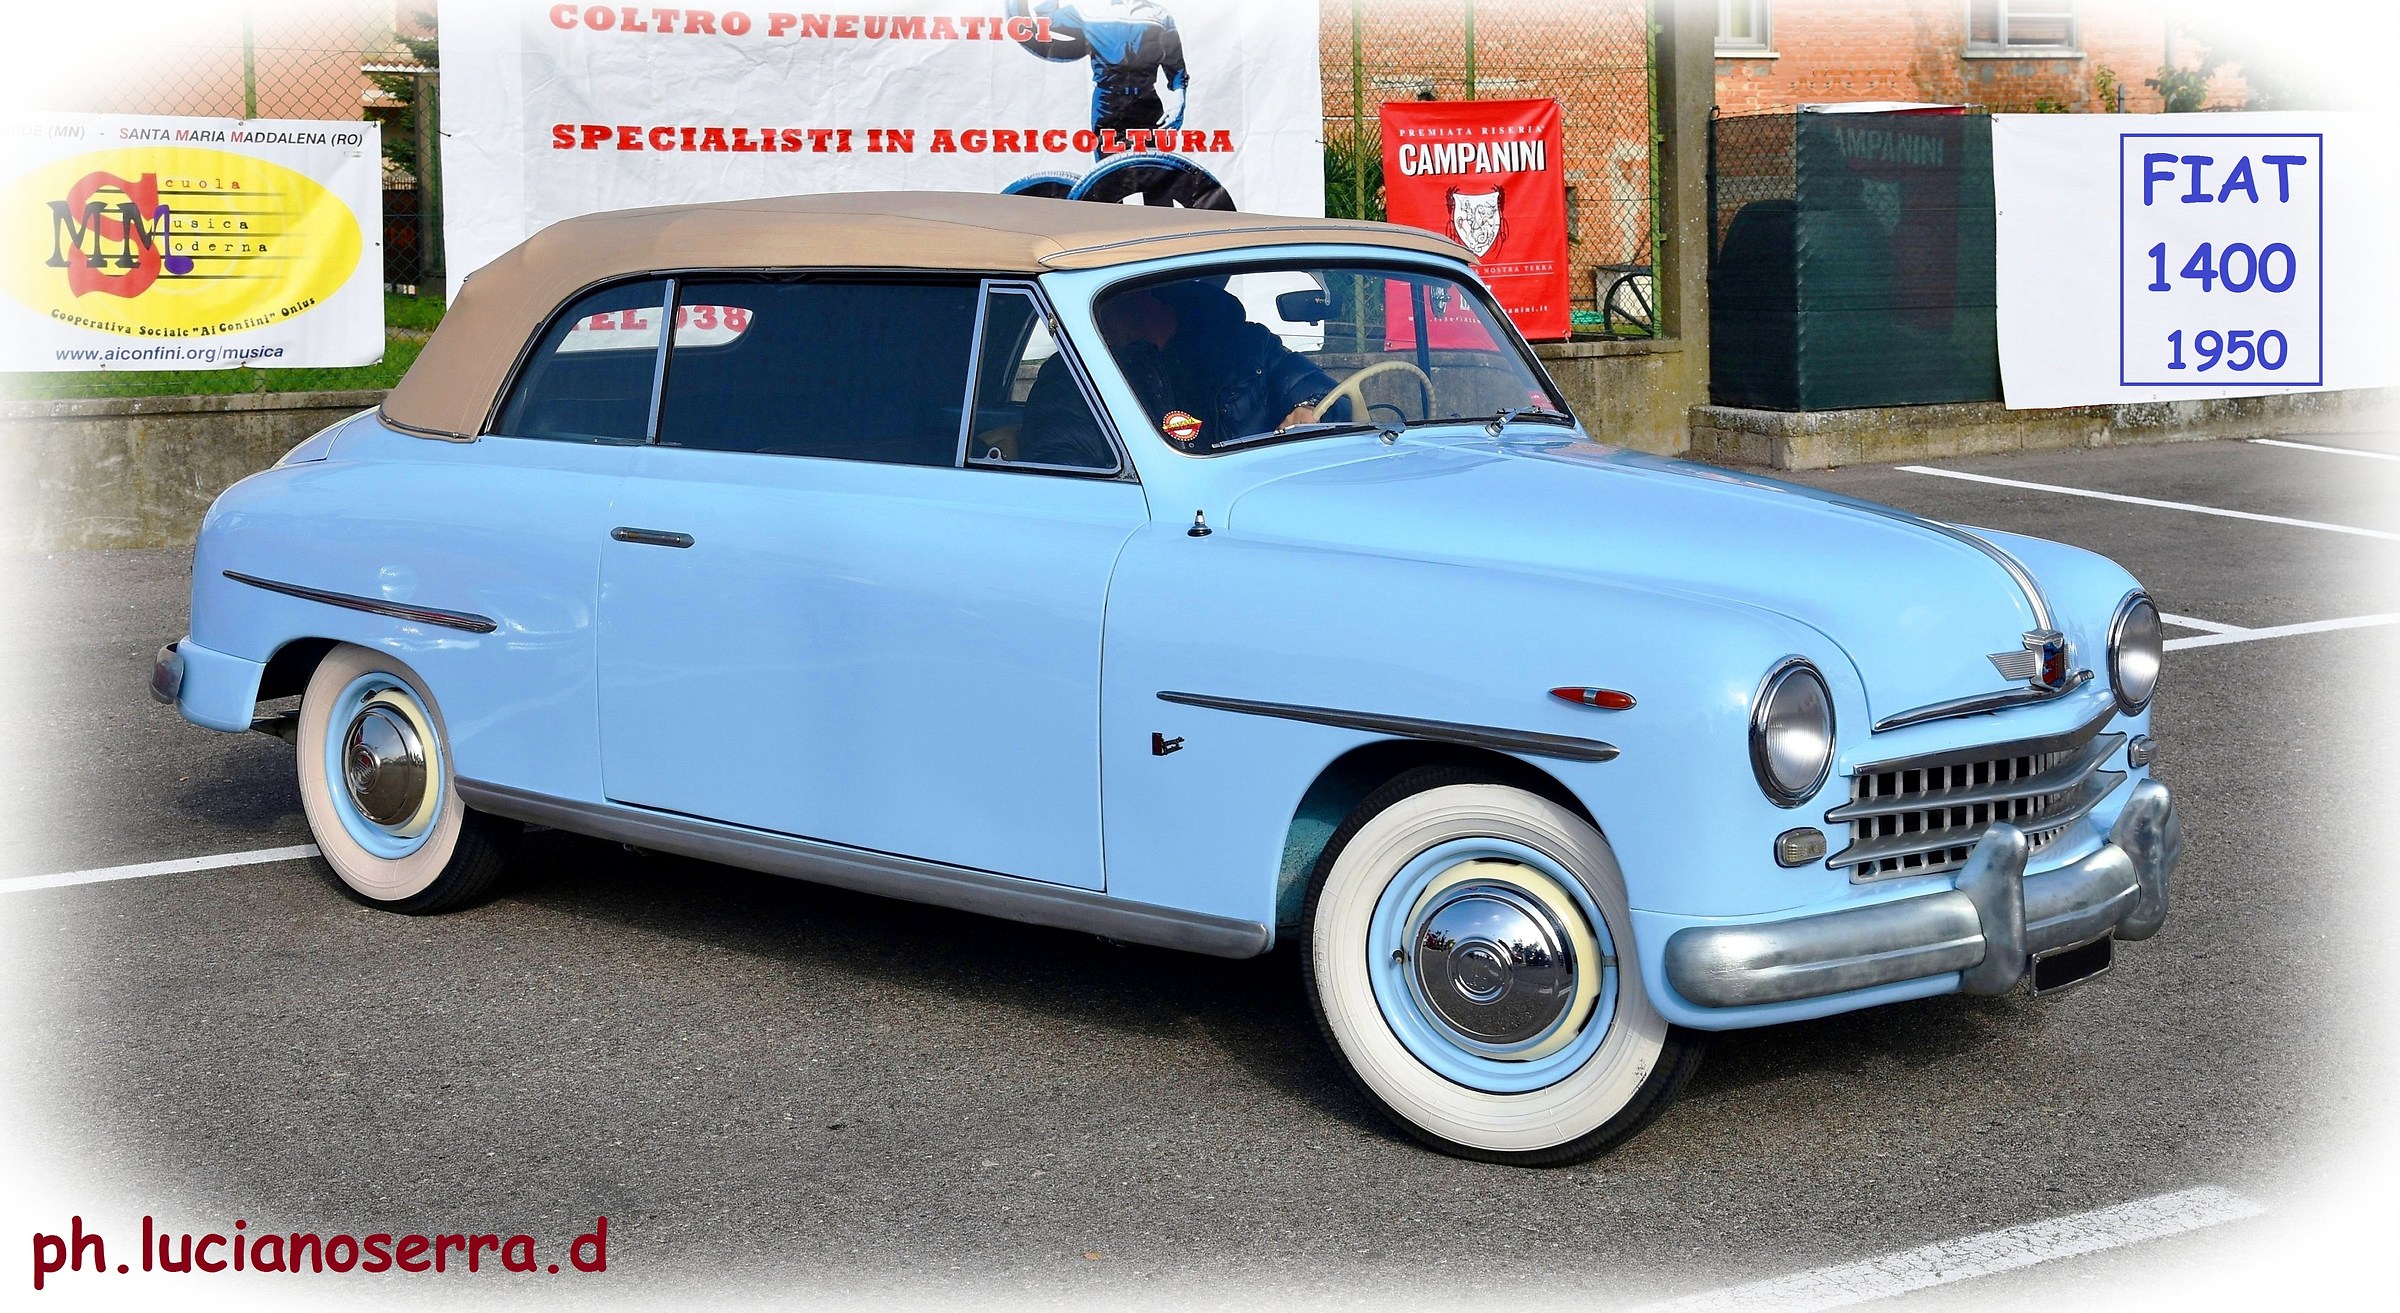 Fiat 1400 Convertible - 1950...